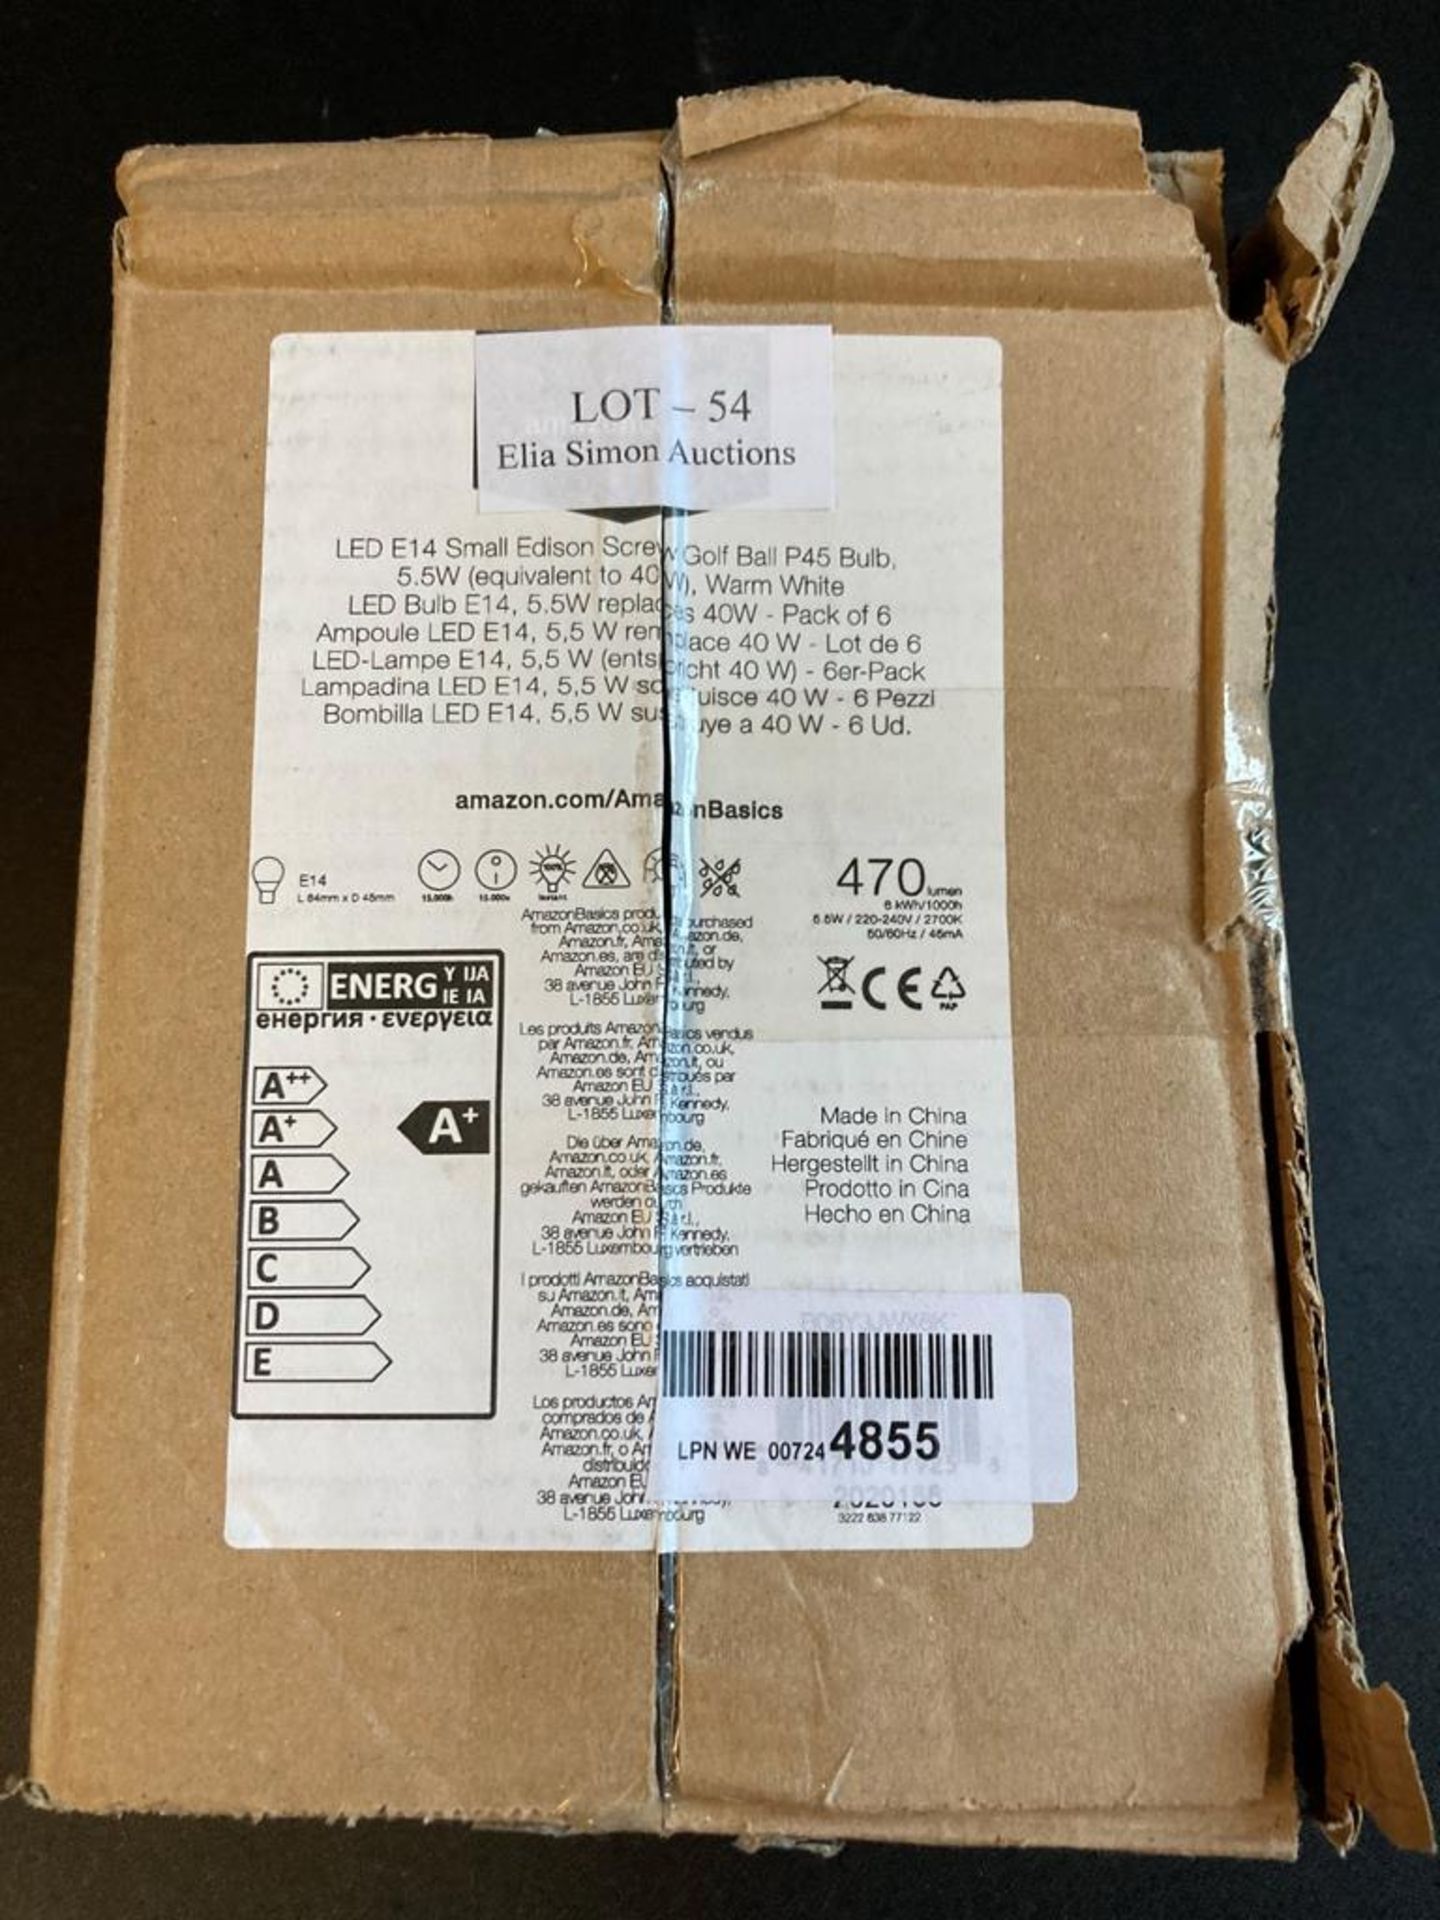 AmazonBasics LED E14 Small Edison Screw Golf Ball P45 Bulb, 5.5W (equivalent to 40W), Warm White- Pa - Image 2 of 2